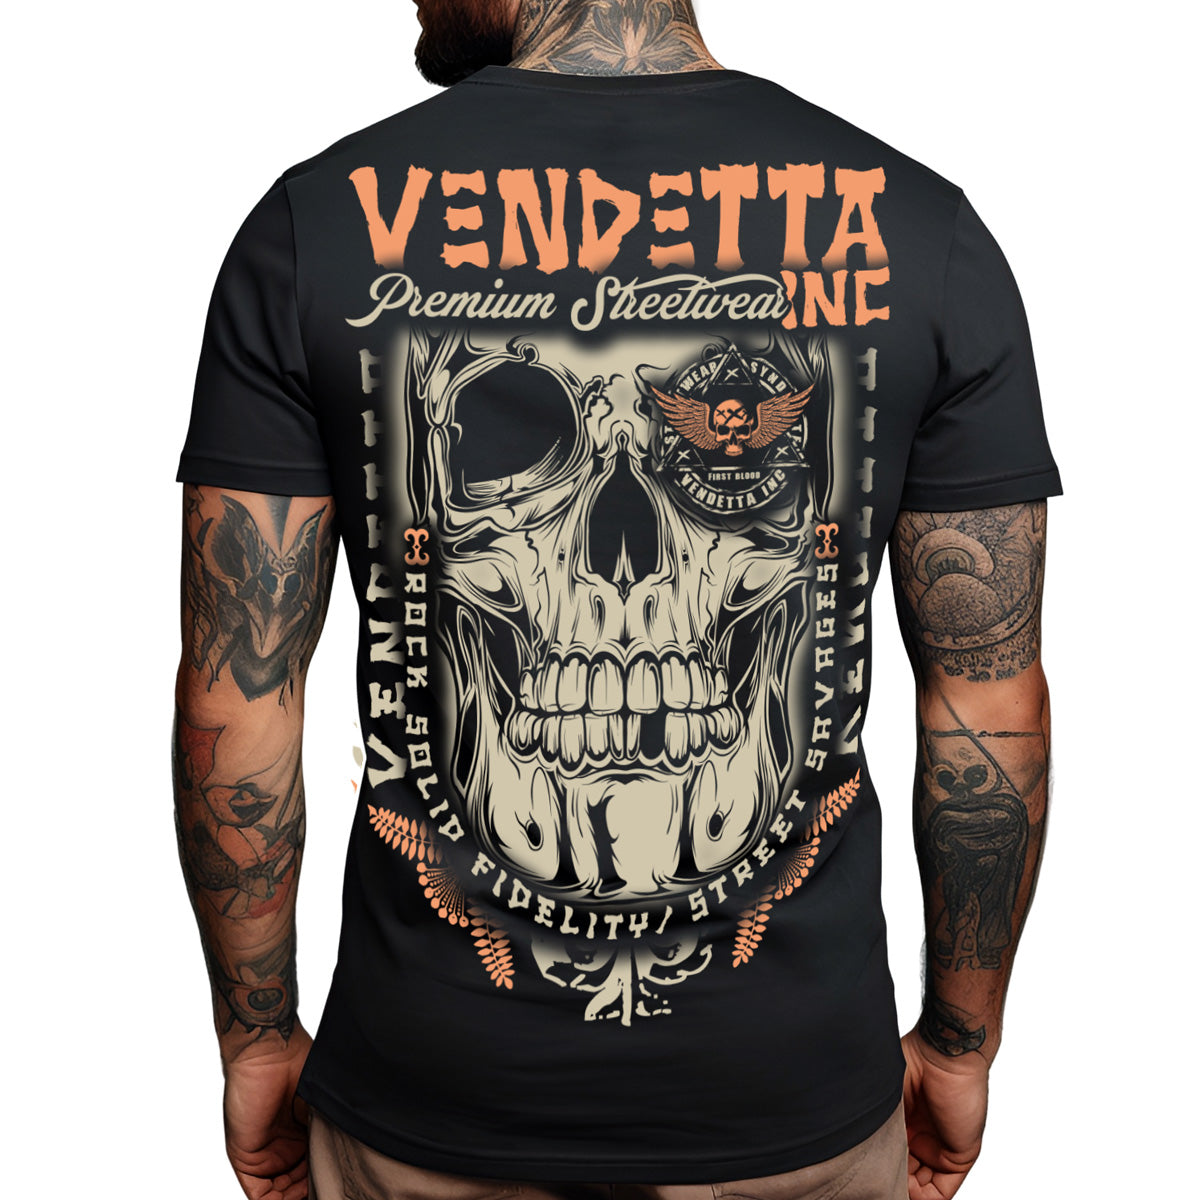 Vendetta Inc. Men's Street Savages T-Shirt Black 1313